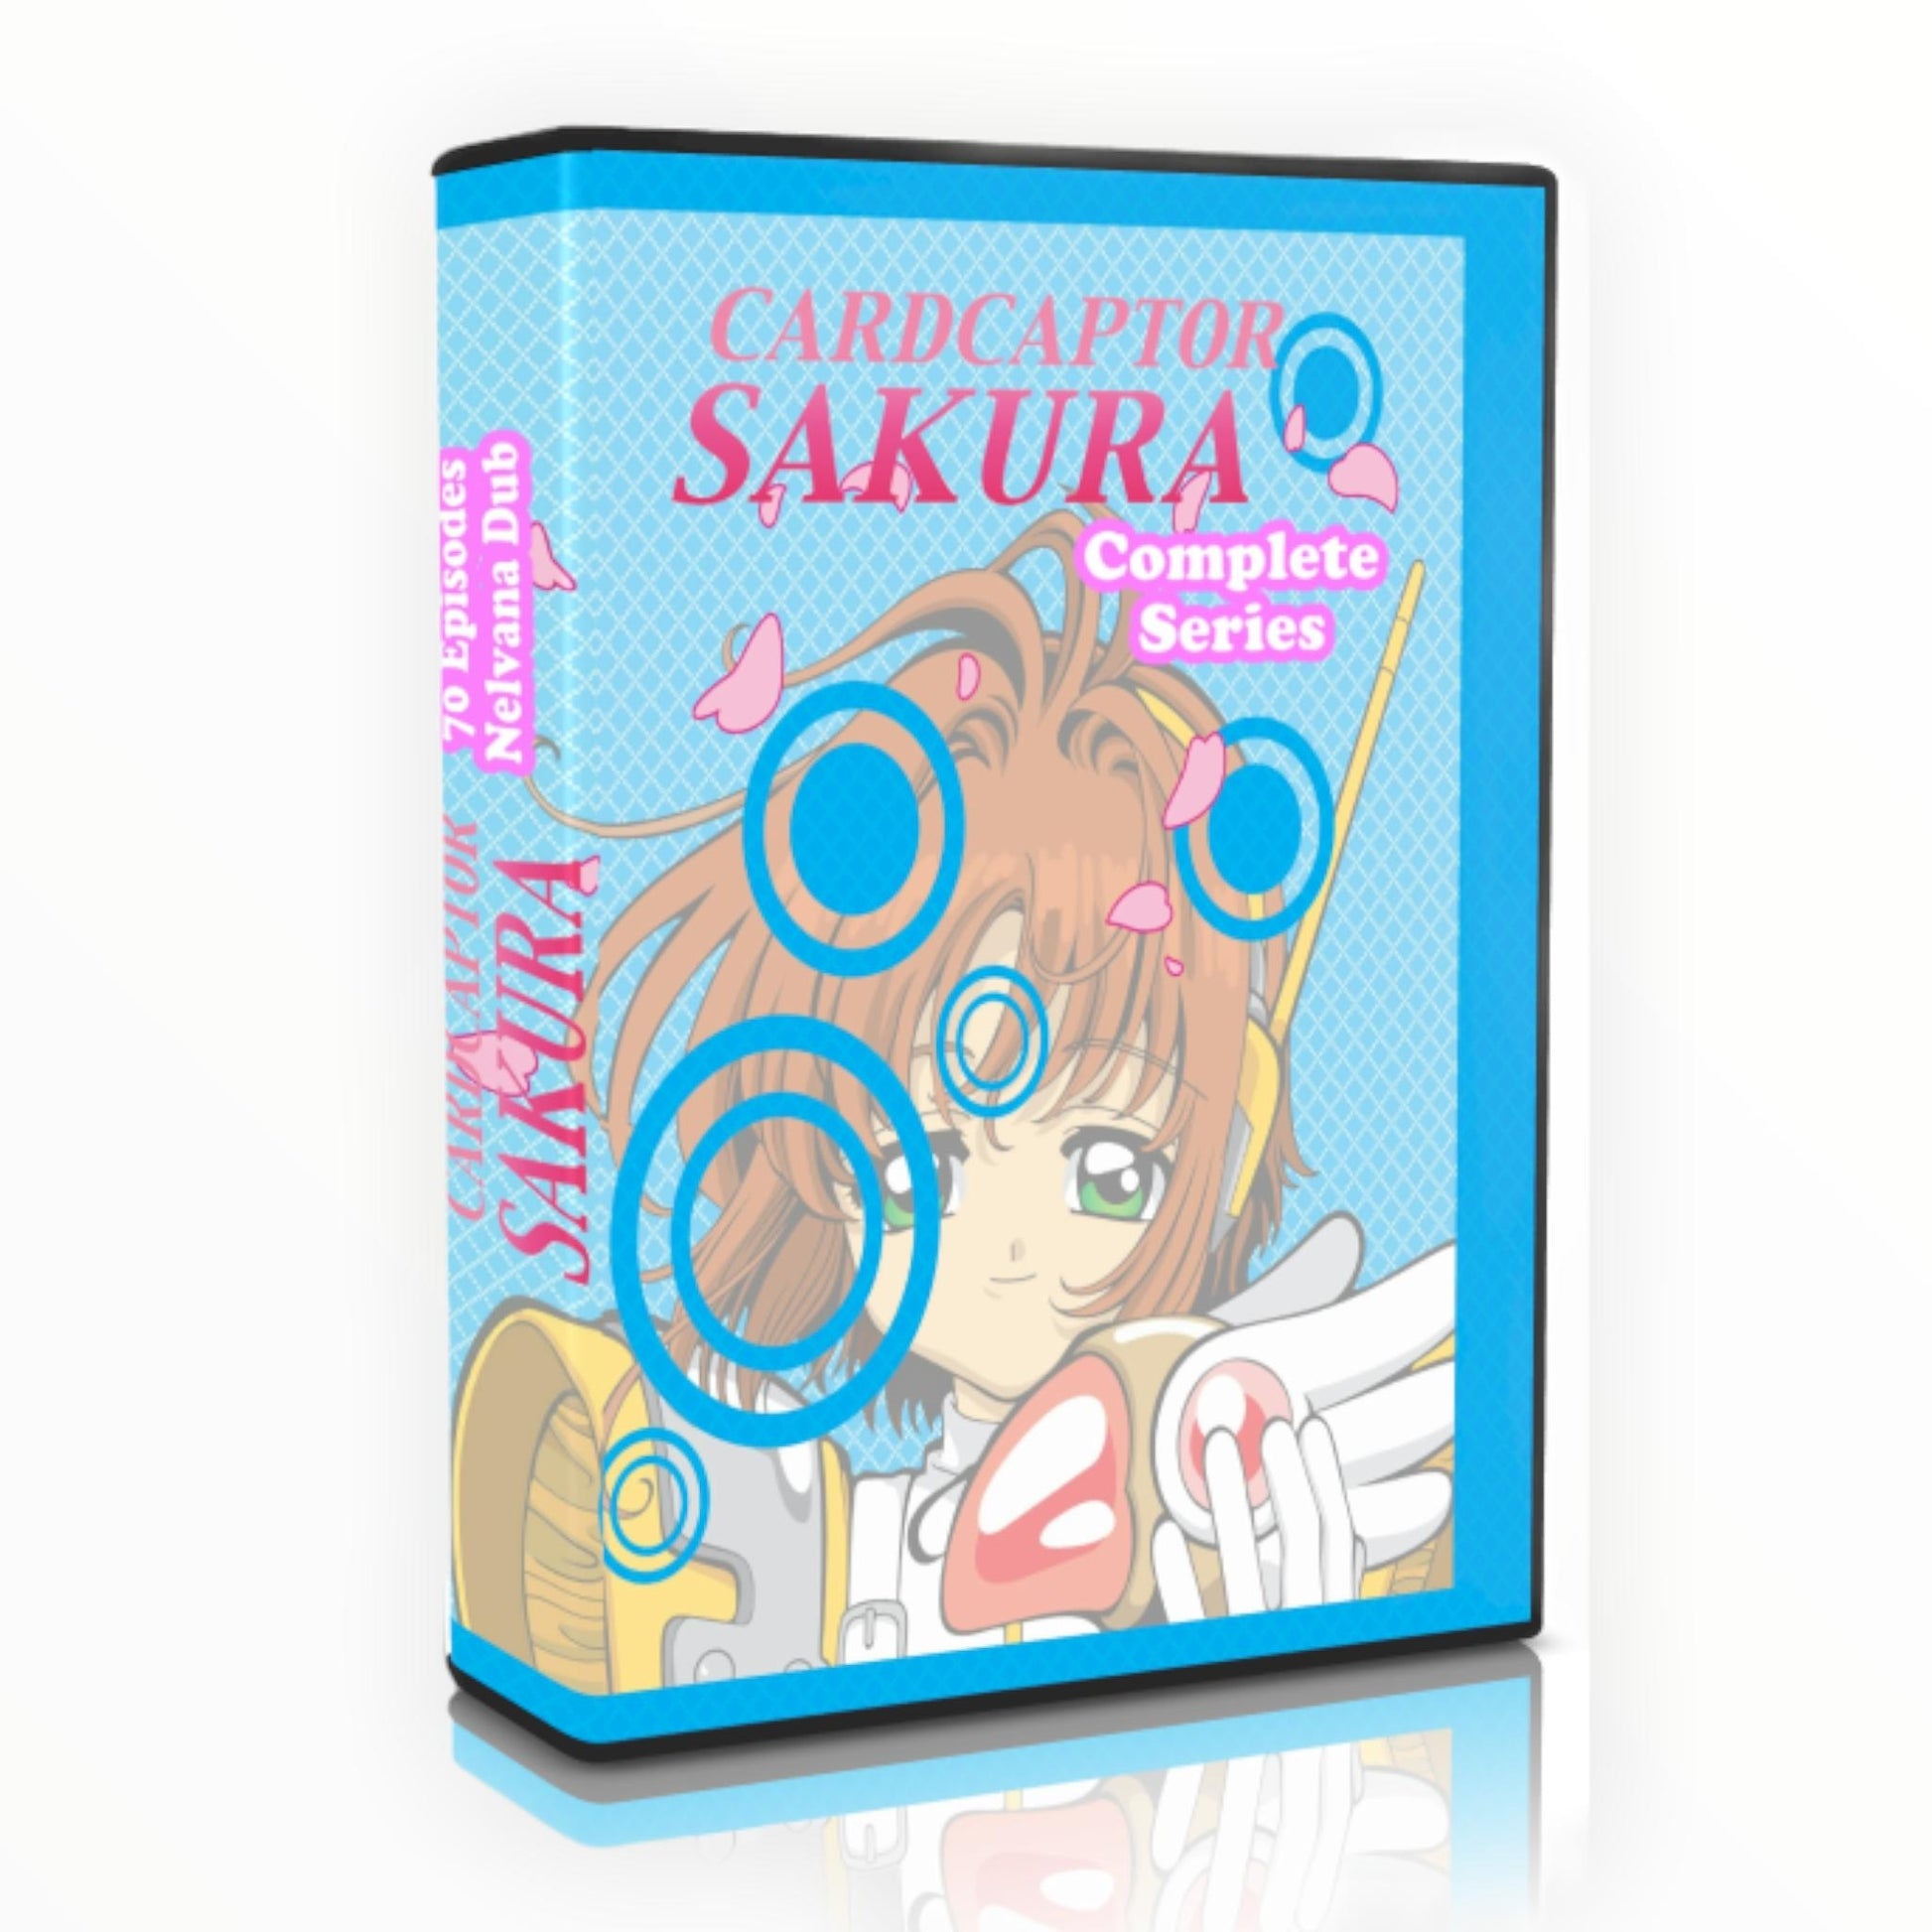 SAKURA CARD CAPTORS EP 2 E 3 